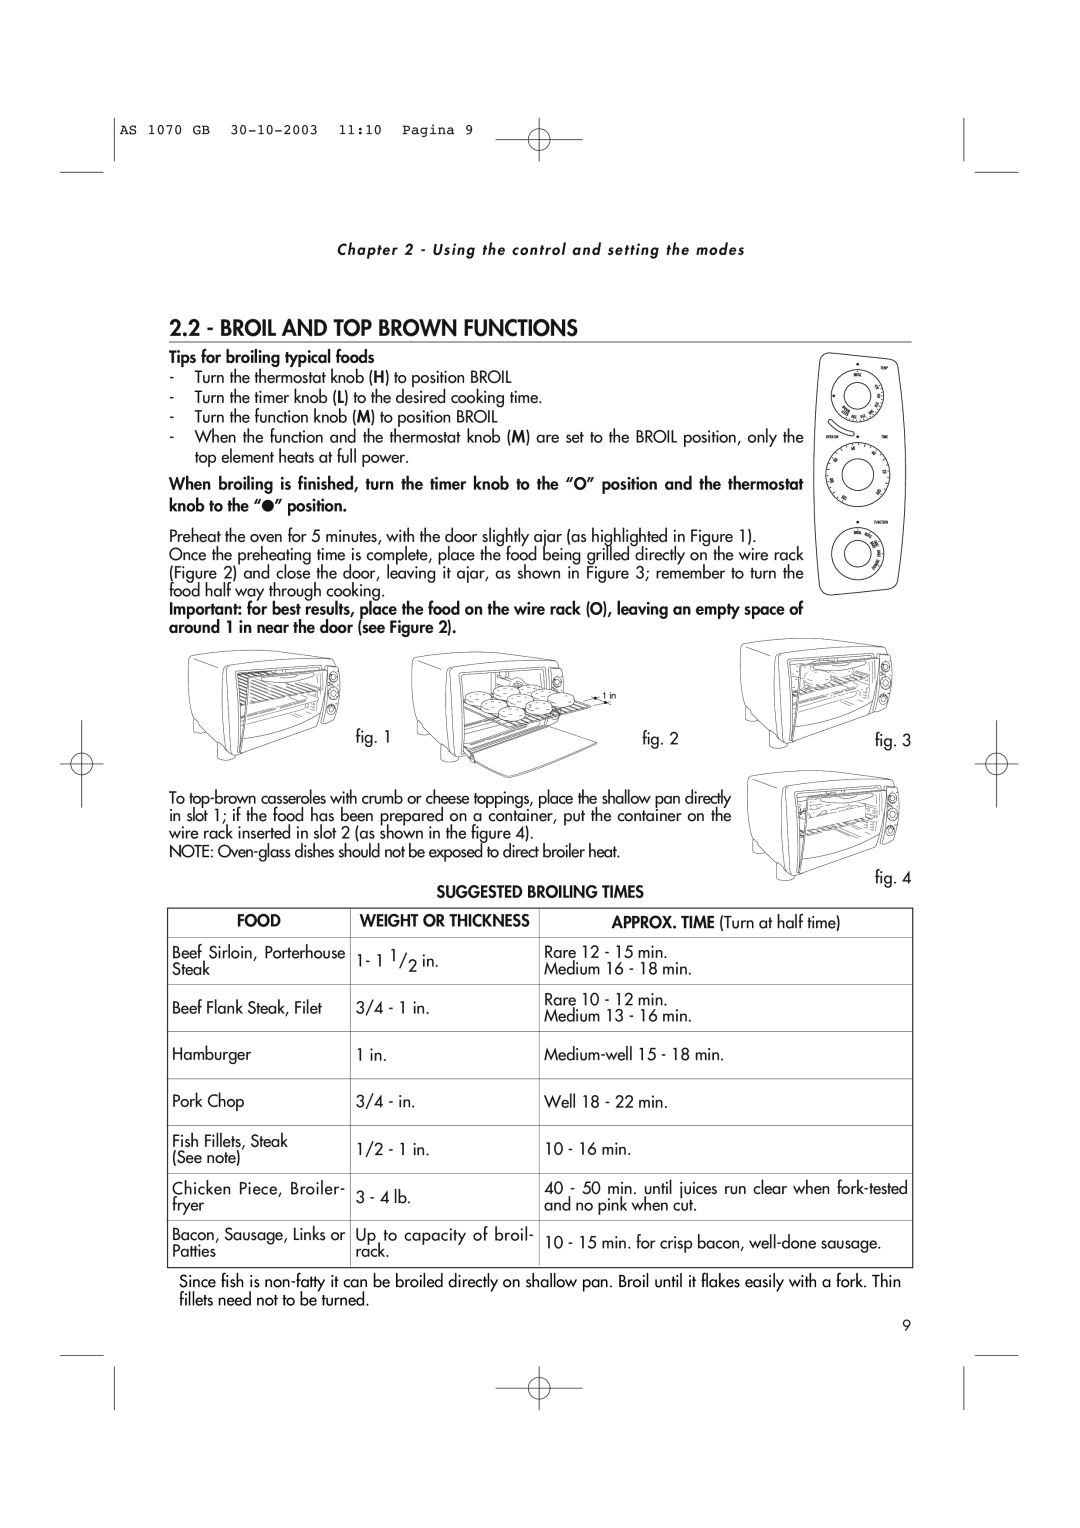 DeLonghi AS-1070 manual Broil And Top Brown Functions 